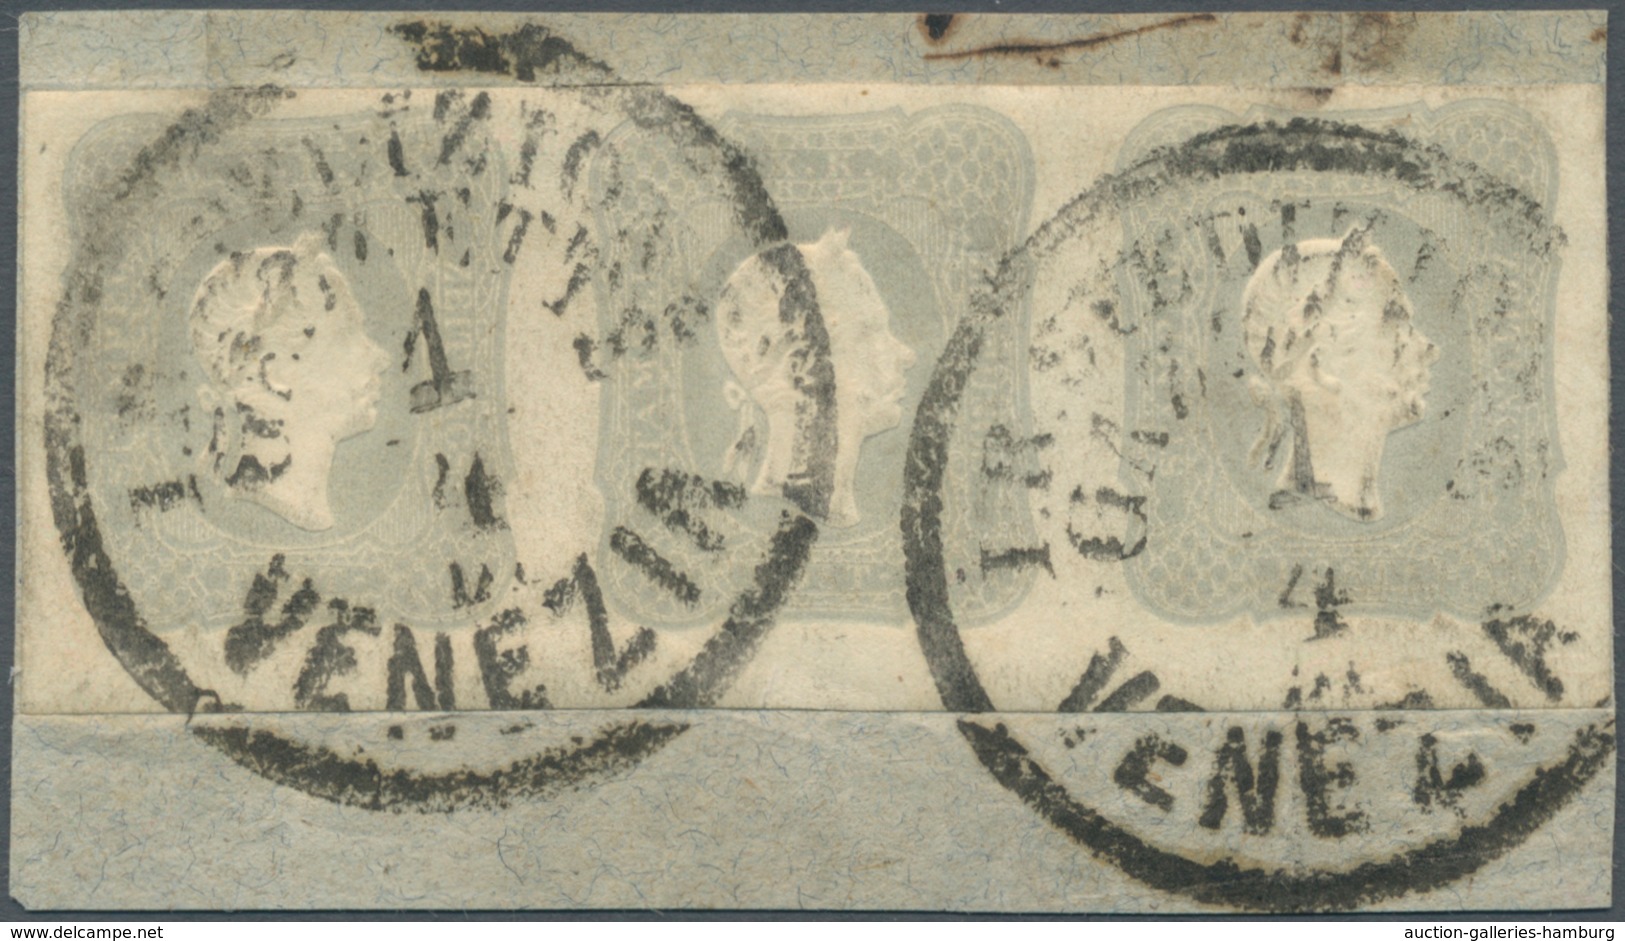 Österreich: 1861, (1,05 Kreuzer/Soldi) Hellgrau Zeitungsmarke, Waagerechter 3er-Streifen, Prägefrisc - Ongebruikt